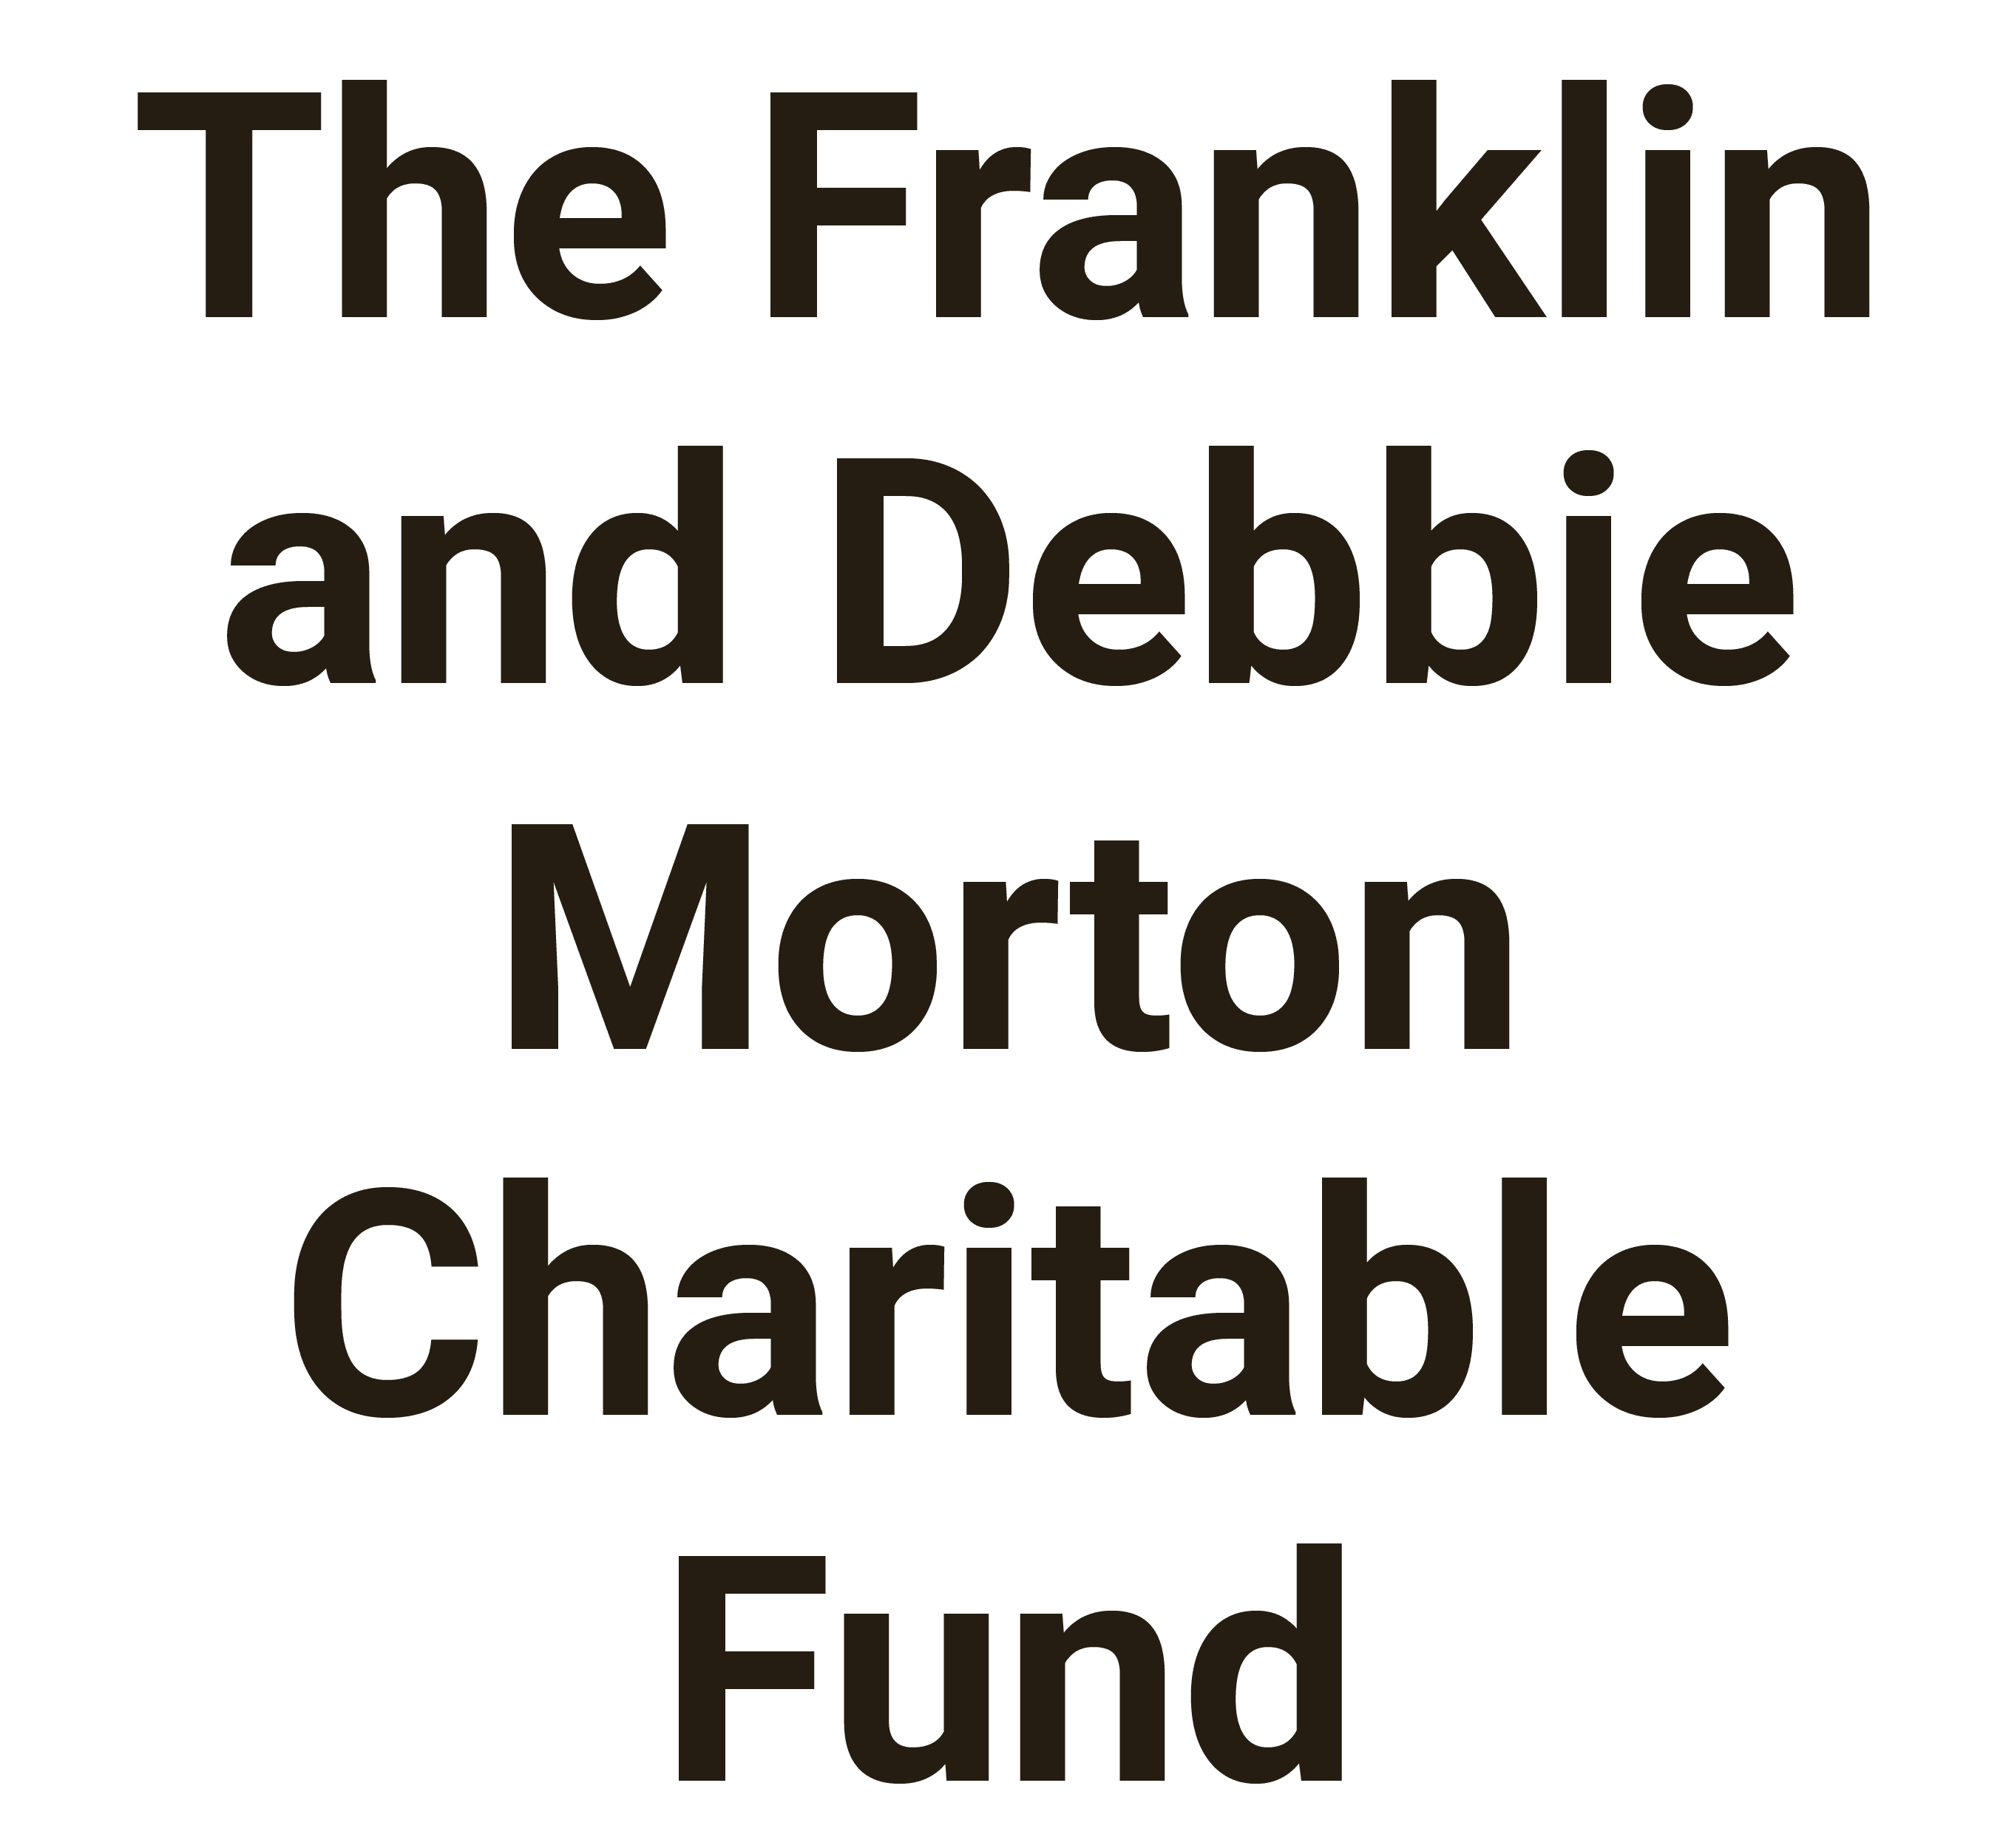 The Franklin and Debbie Morton Charitable Fund